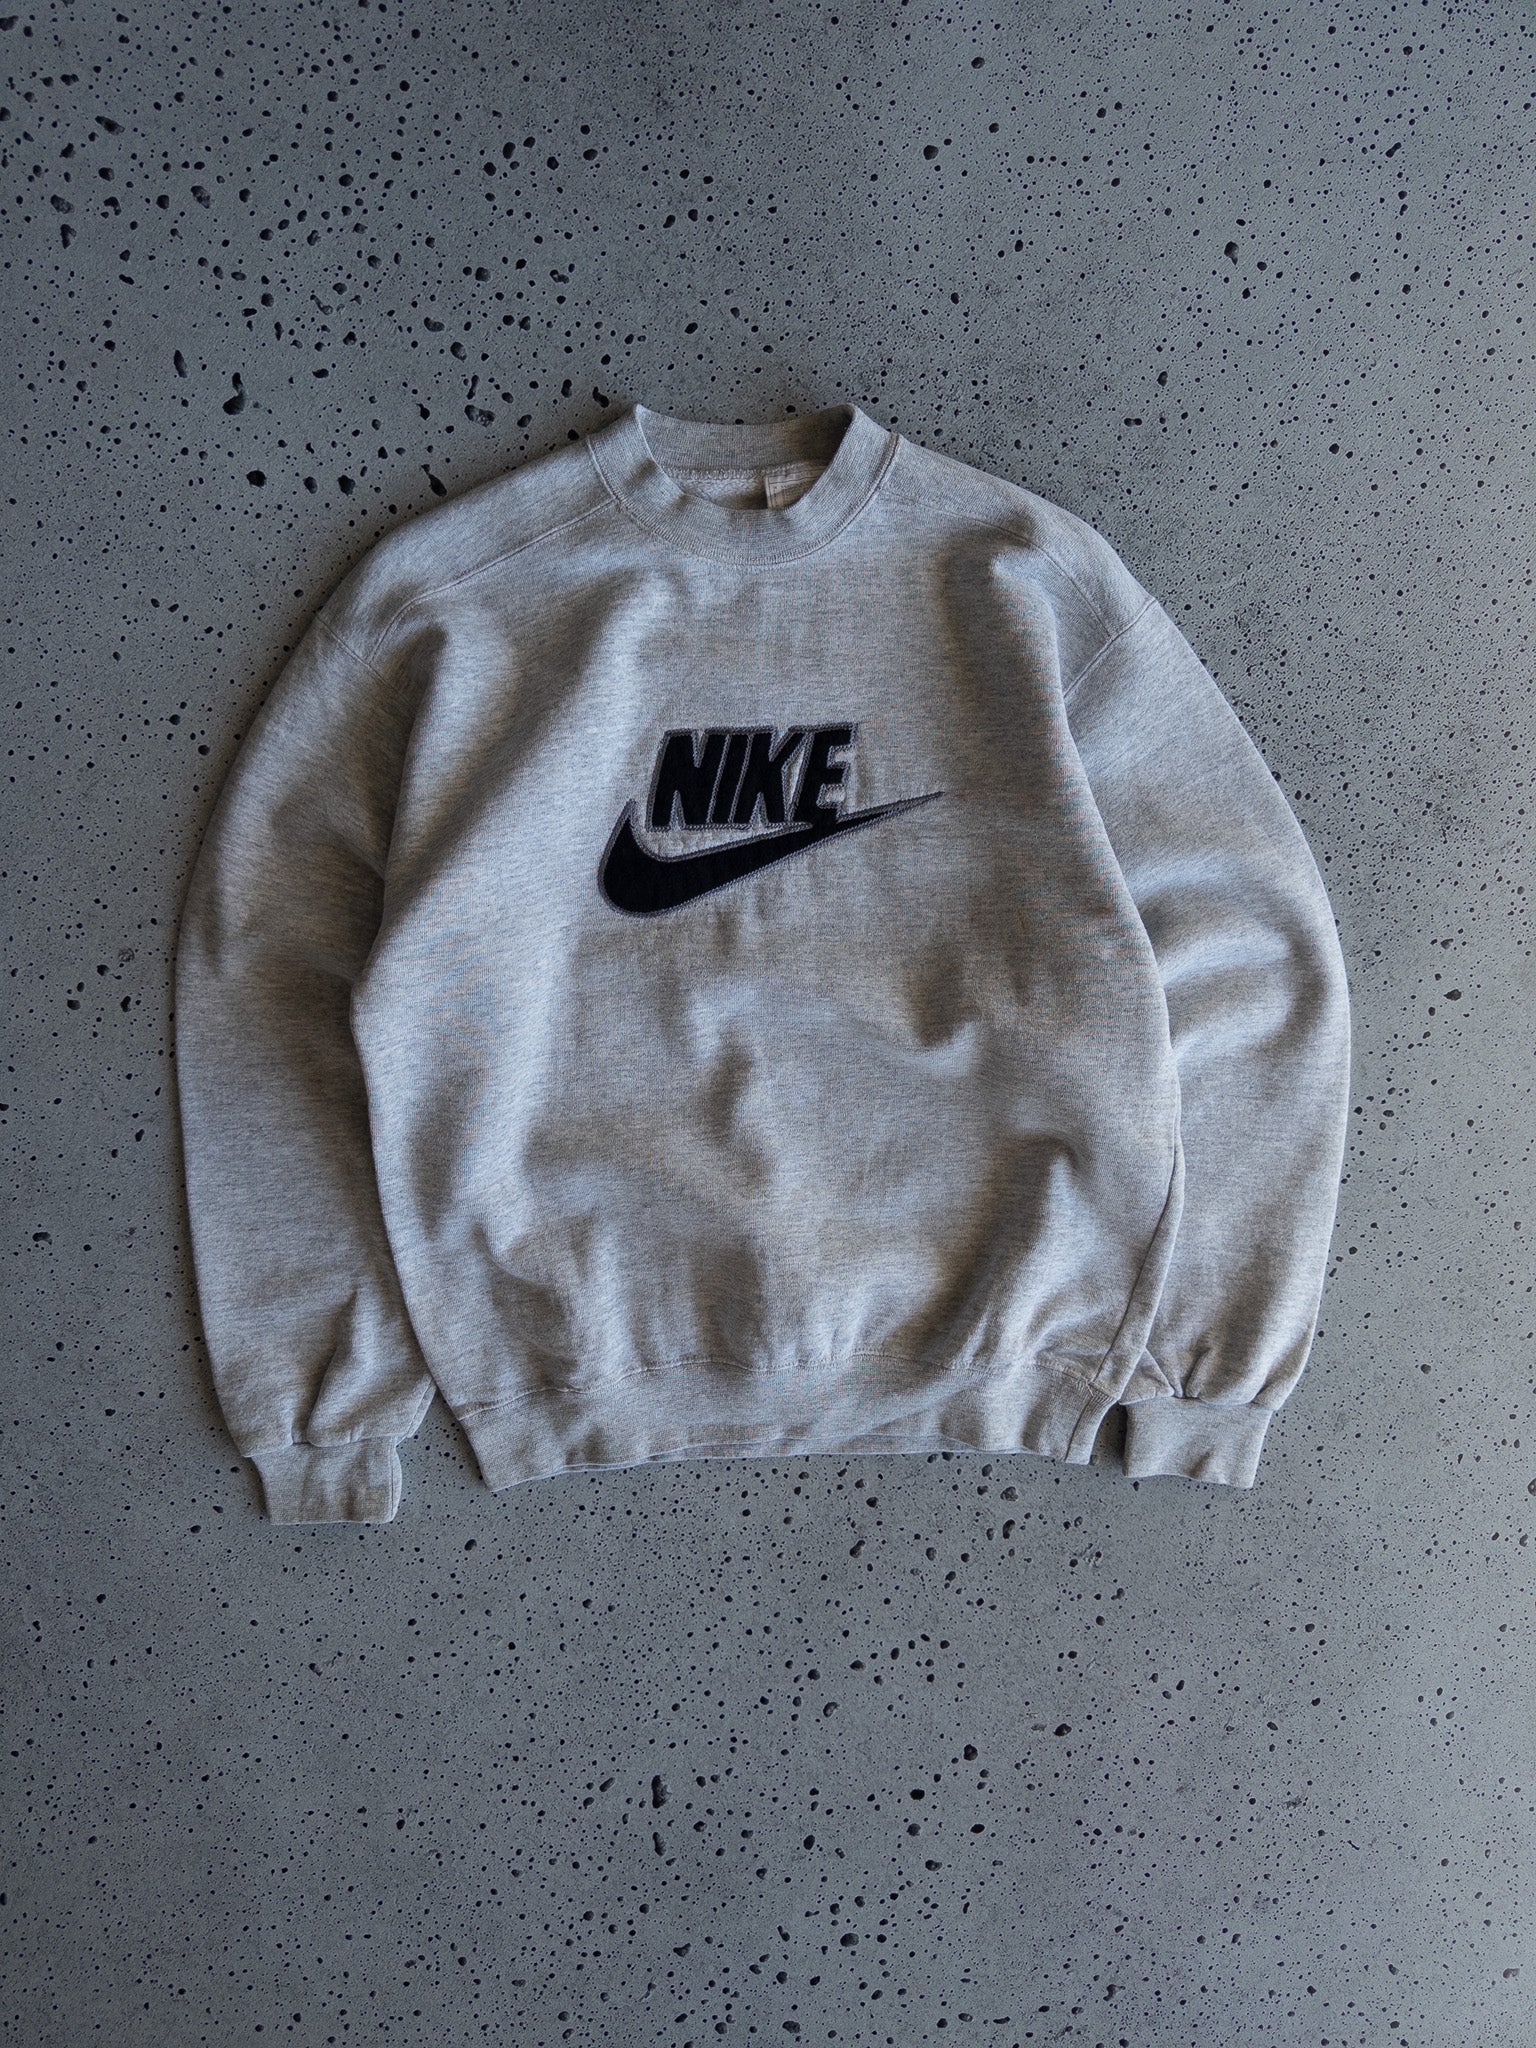 Vintage Nike Sweatshirt (S)